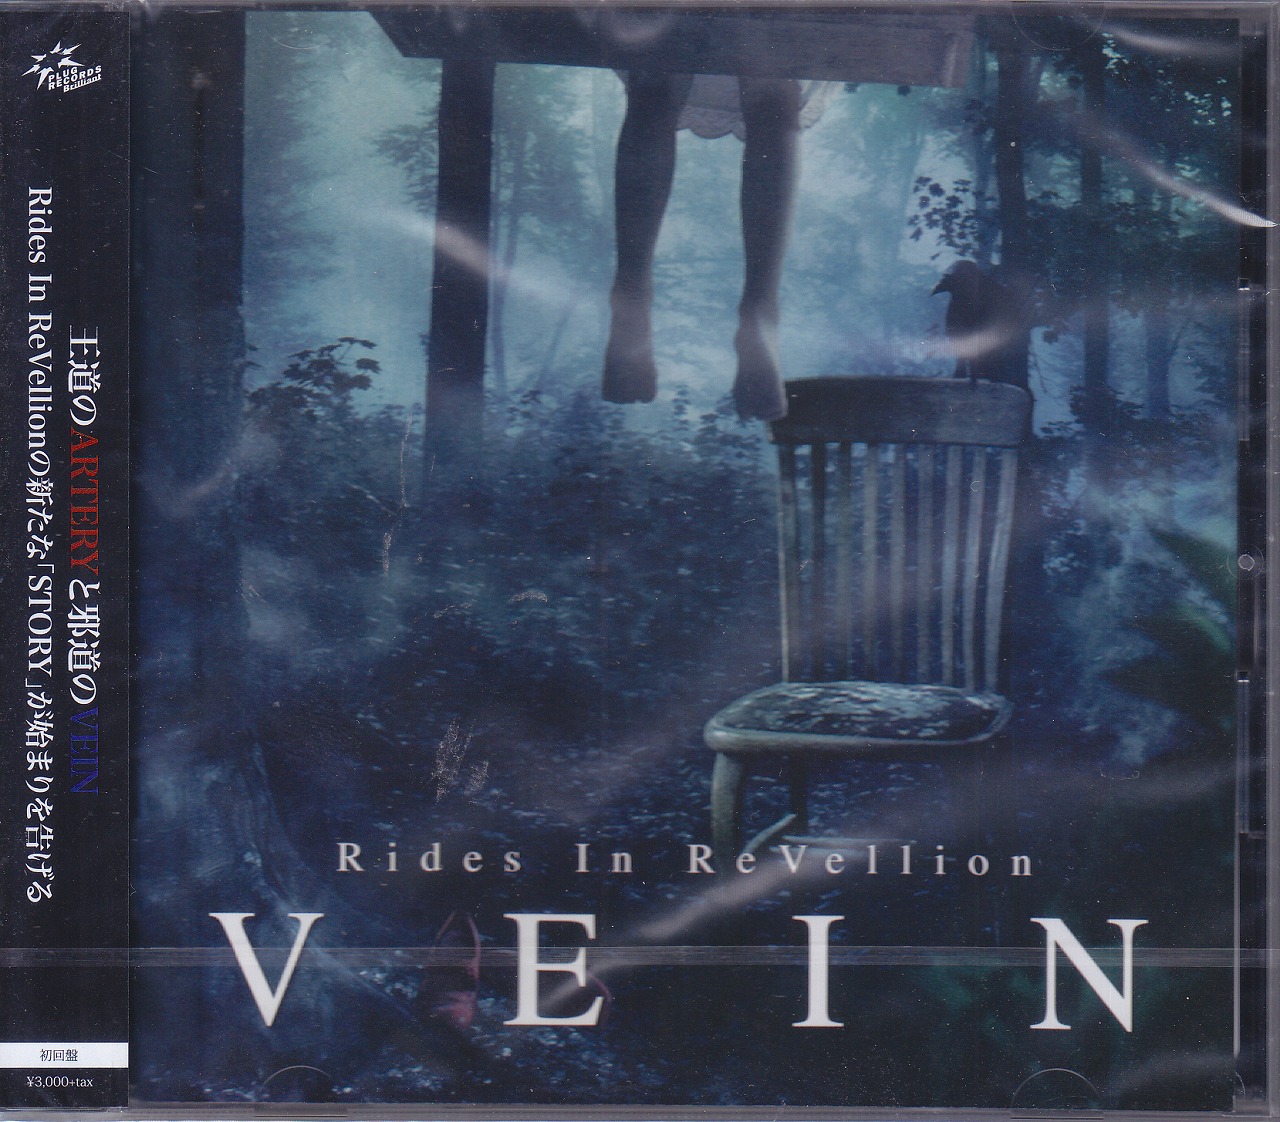 Rides In ReVellion ( ライズインリベリオン )  の CD 【初回盤】VEIN